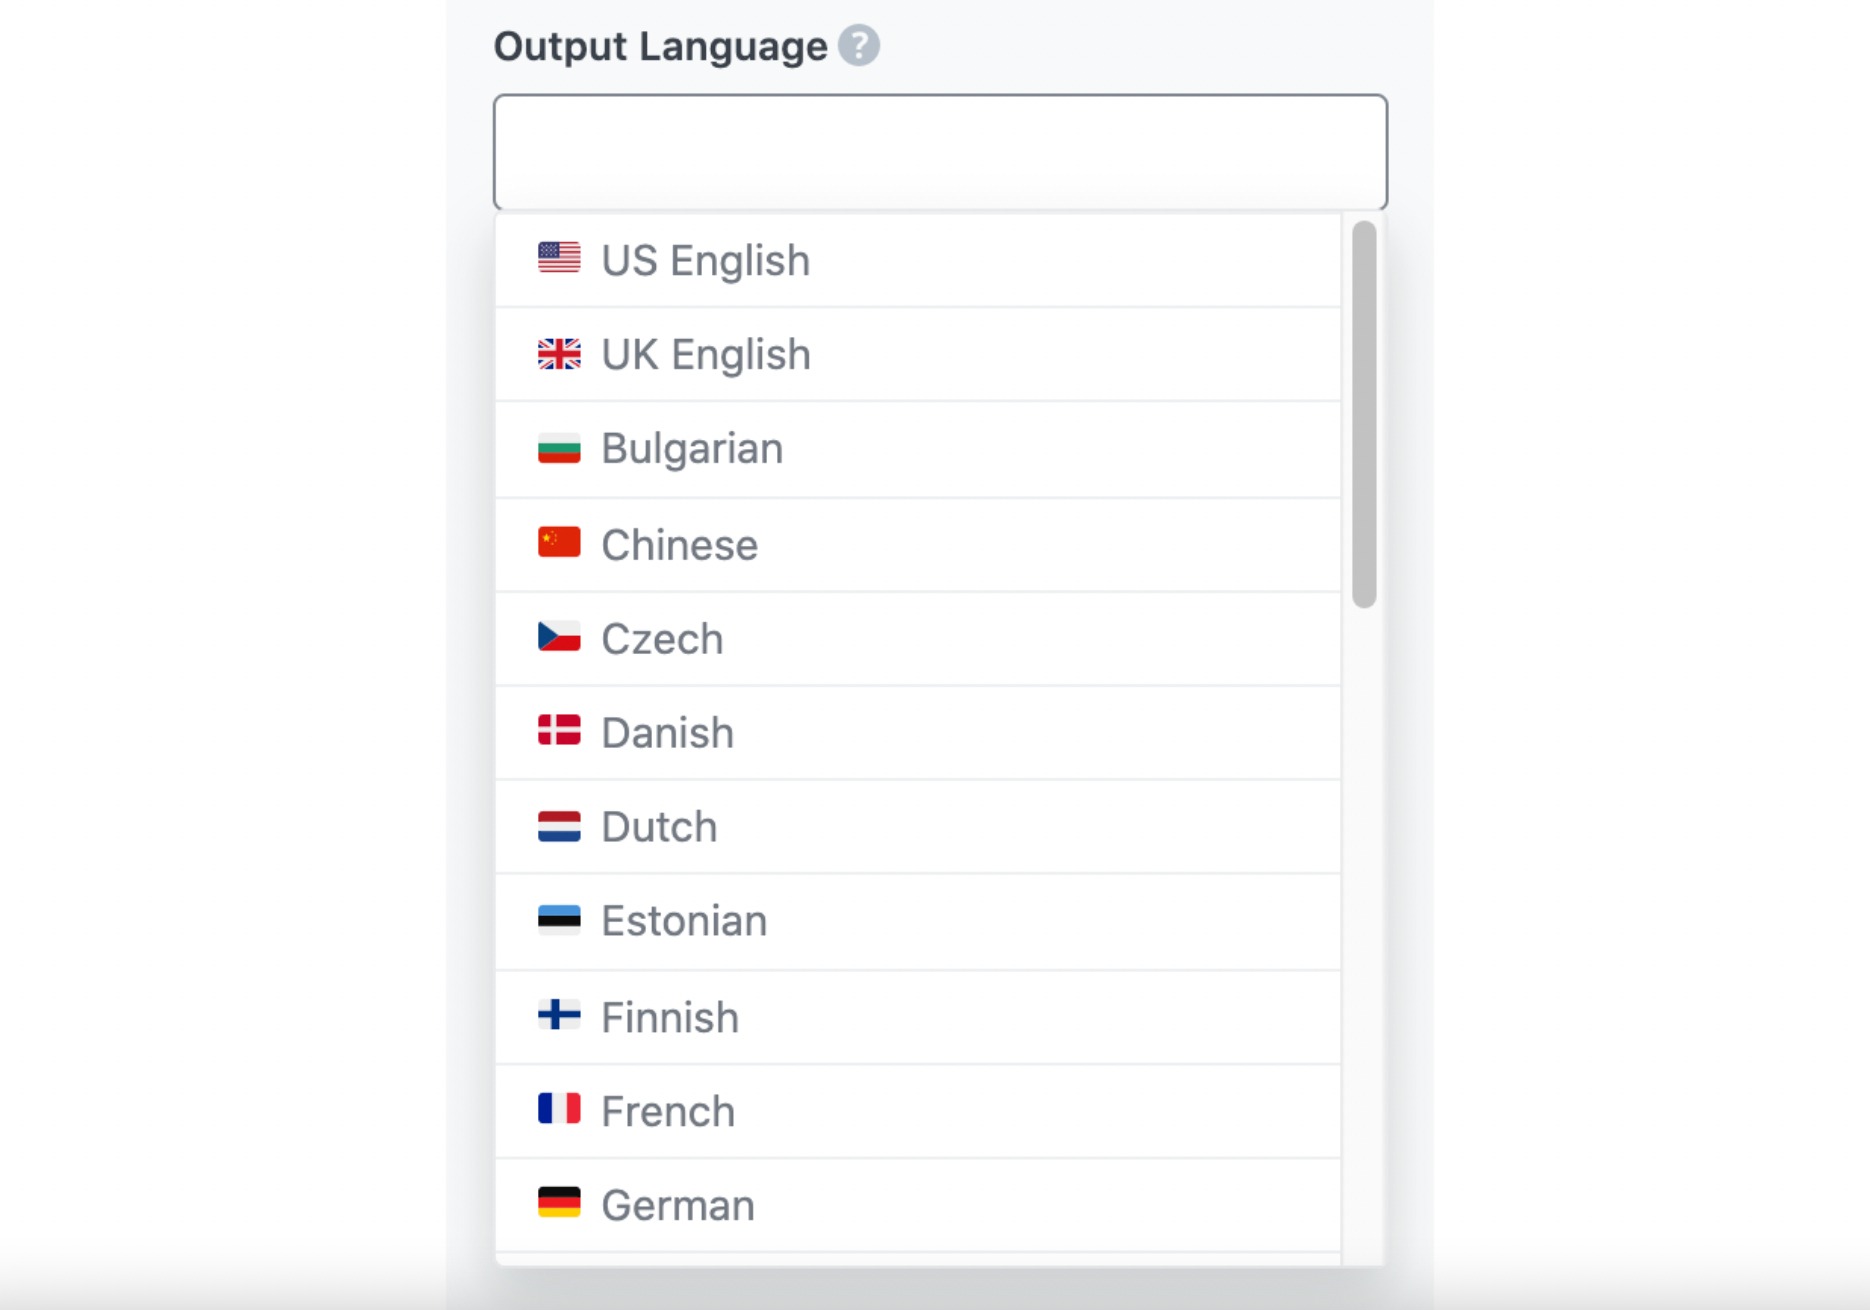 Select Output Language